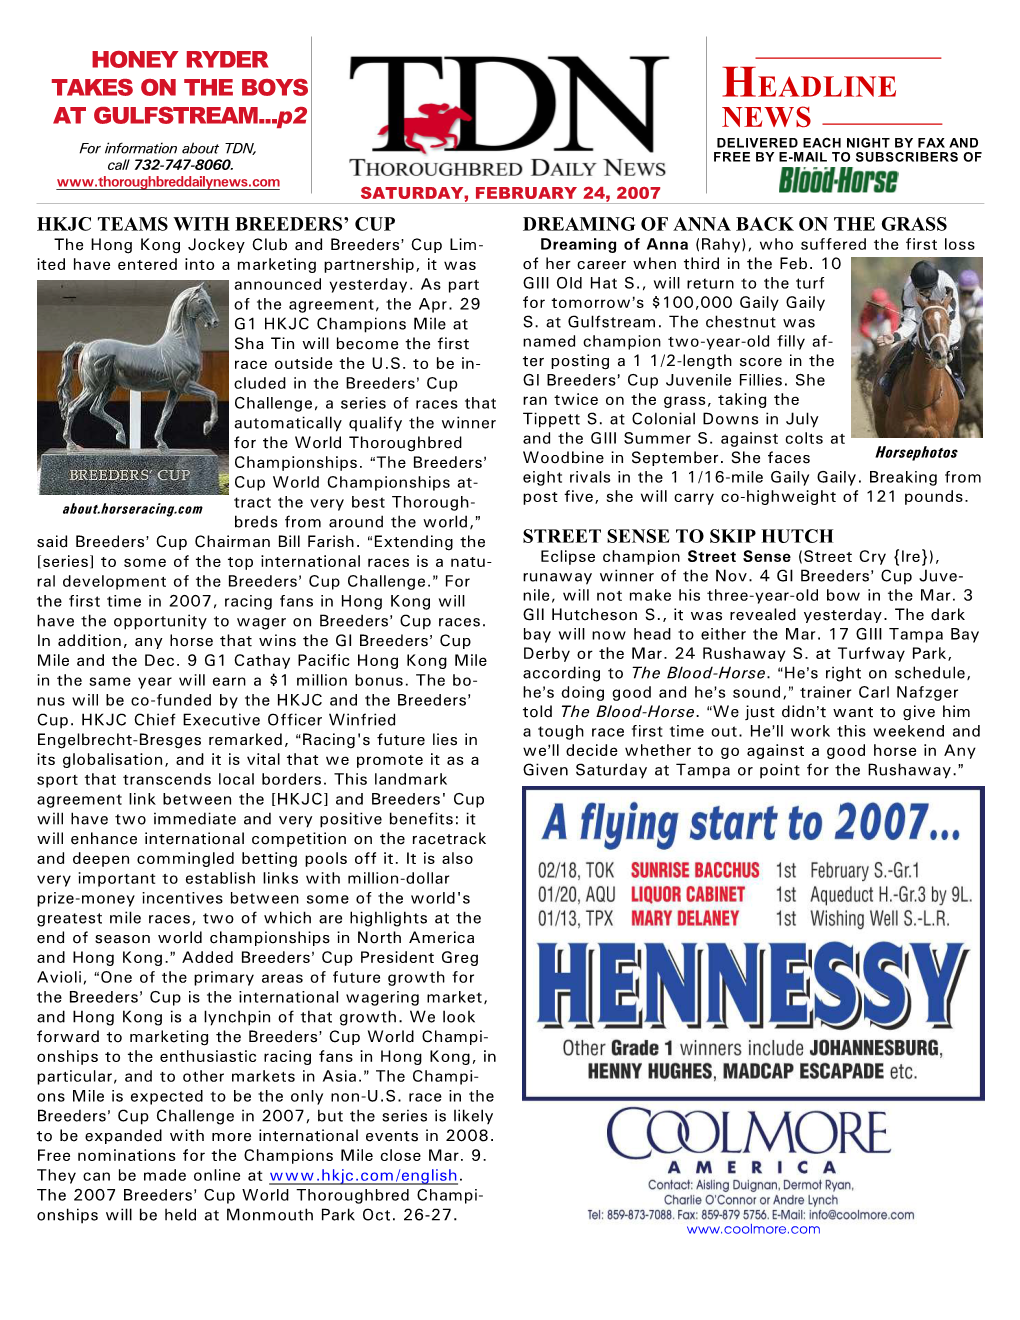 HEADLINE NEWS • 2/24/07 • PAGE 2 of 4